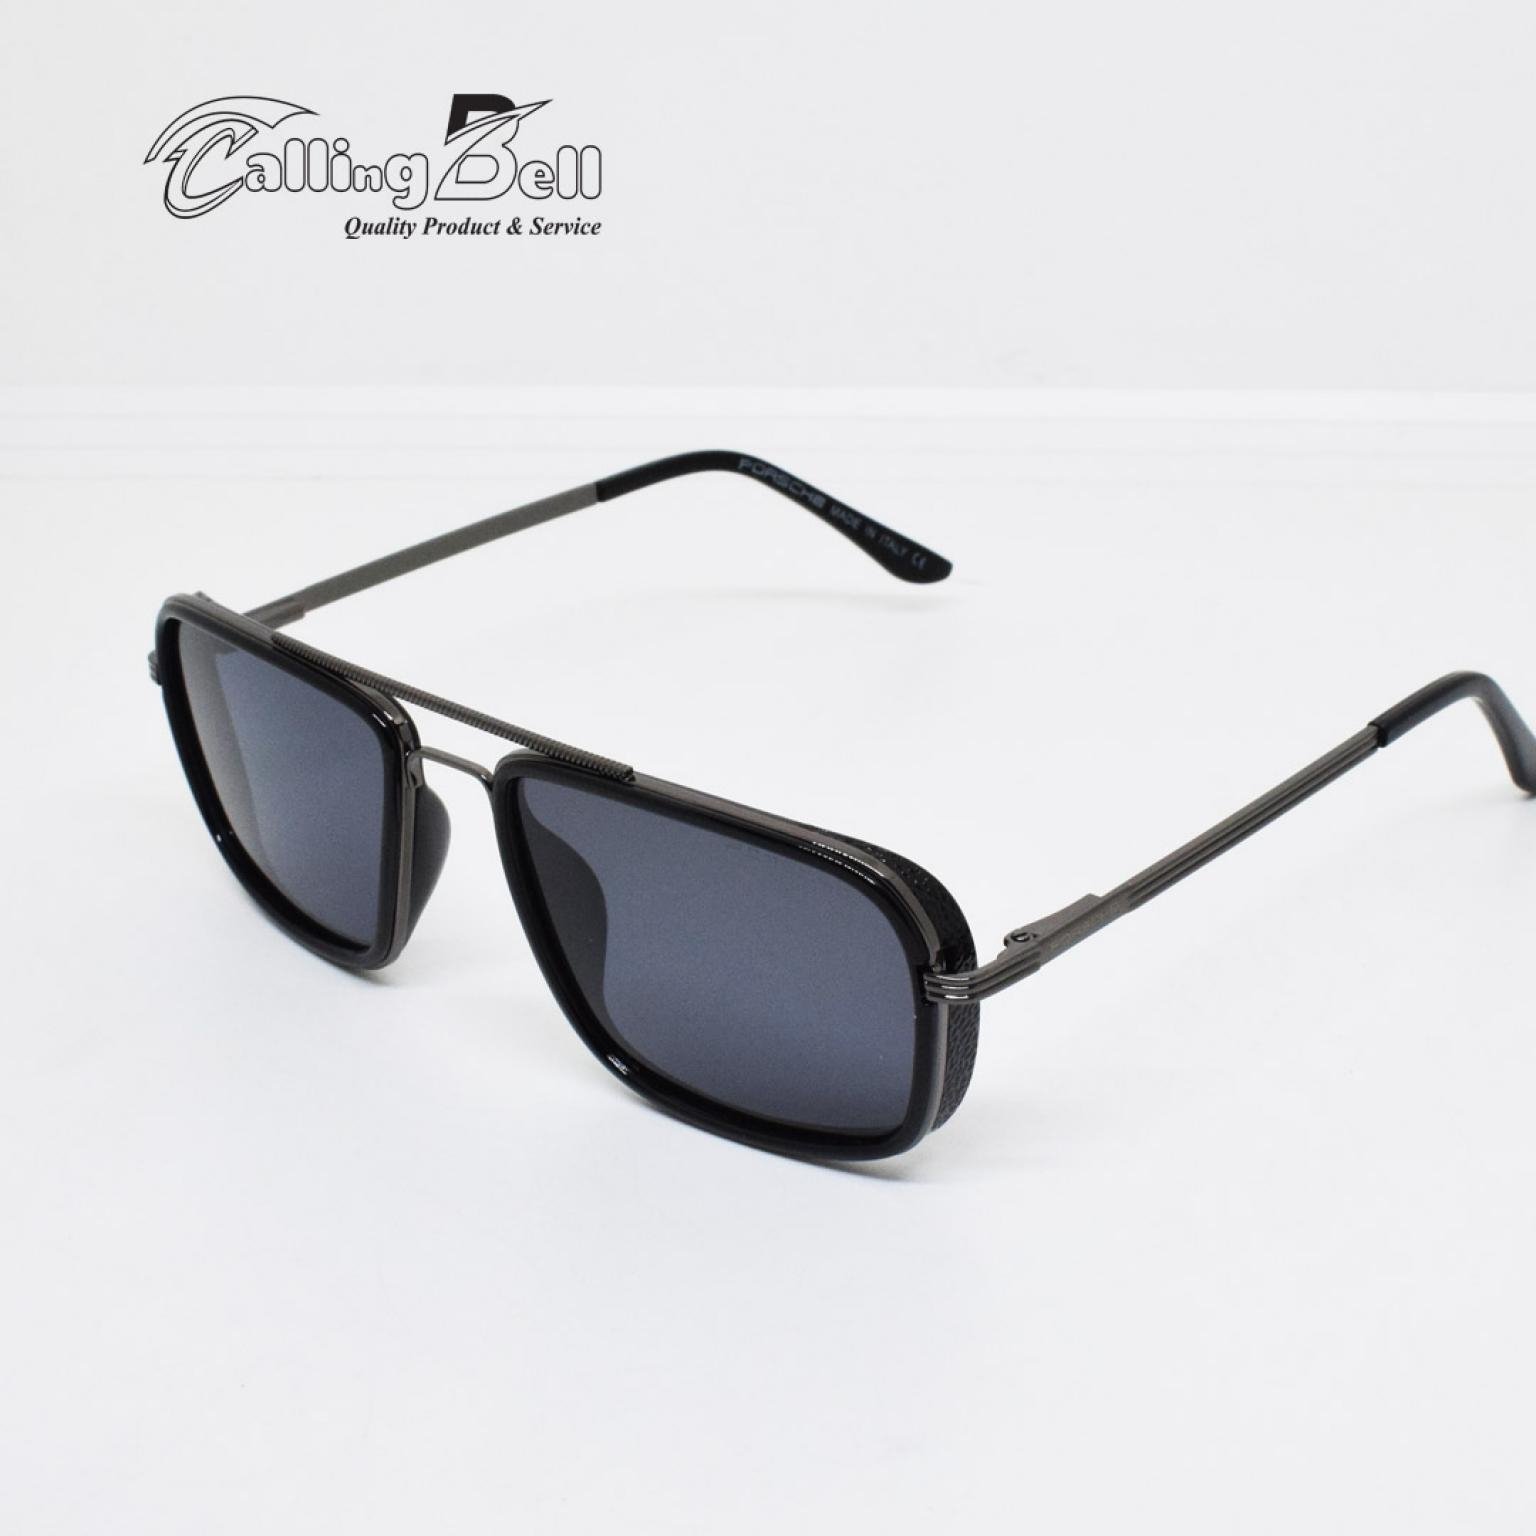 Hot Sale Glasses Lens Sunglasses Men Women Classic Square Driving Sun Glasses Male Fashion Black Shades UV400